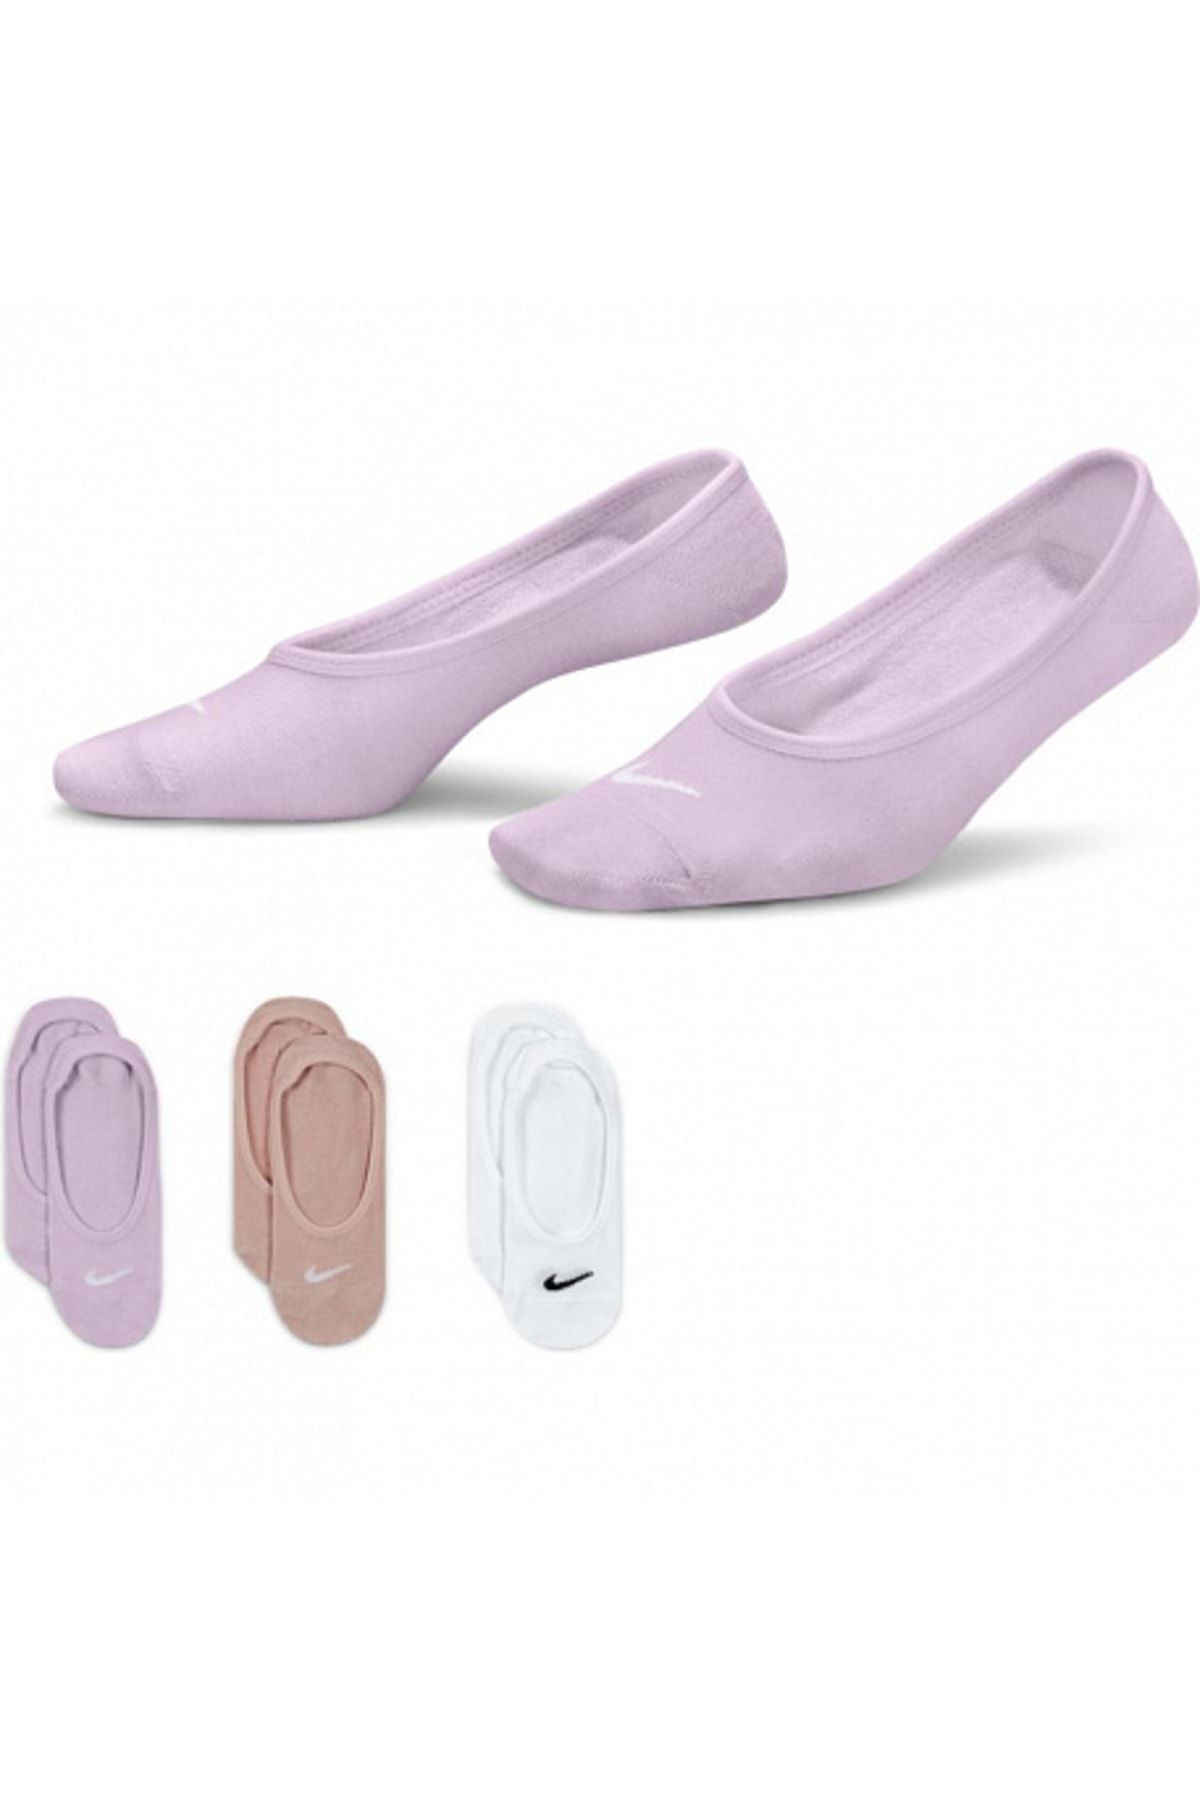 Nike Evry LTwt Foot Kadın Fitness Çorabı  3 Çift  Sx4863-990